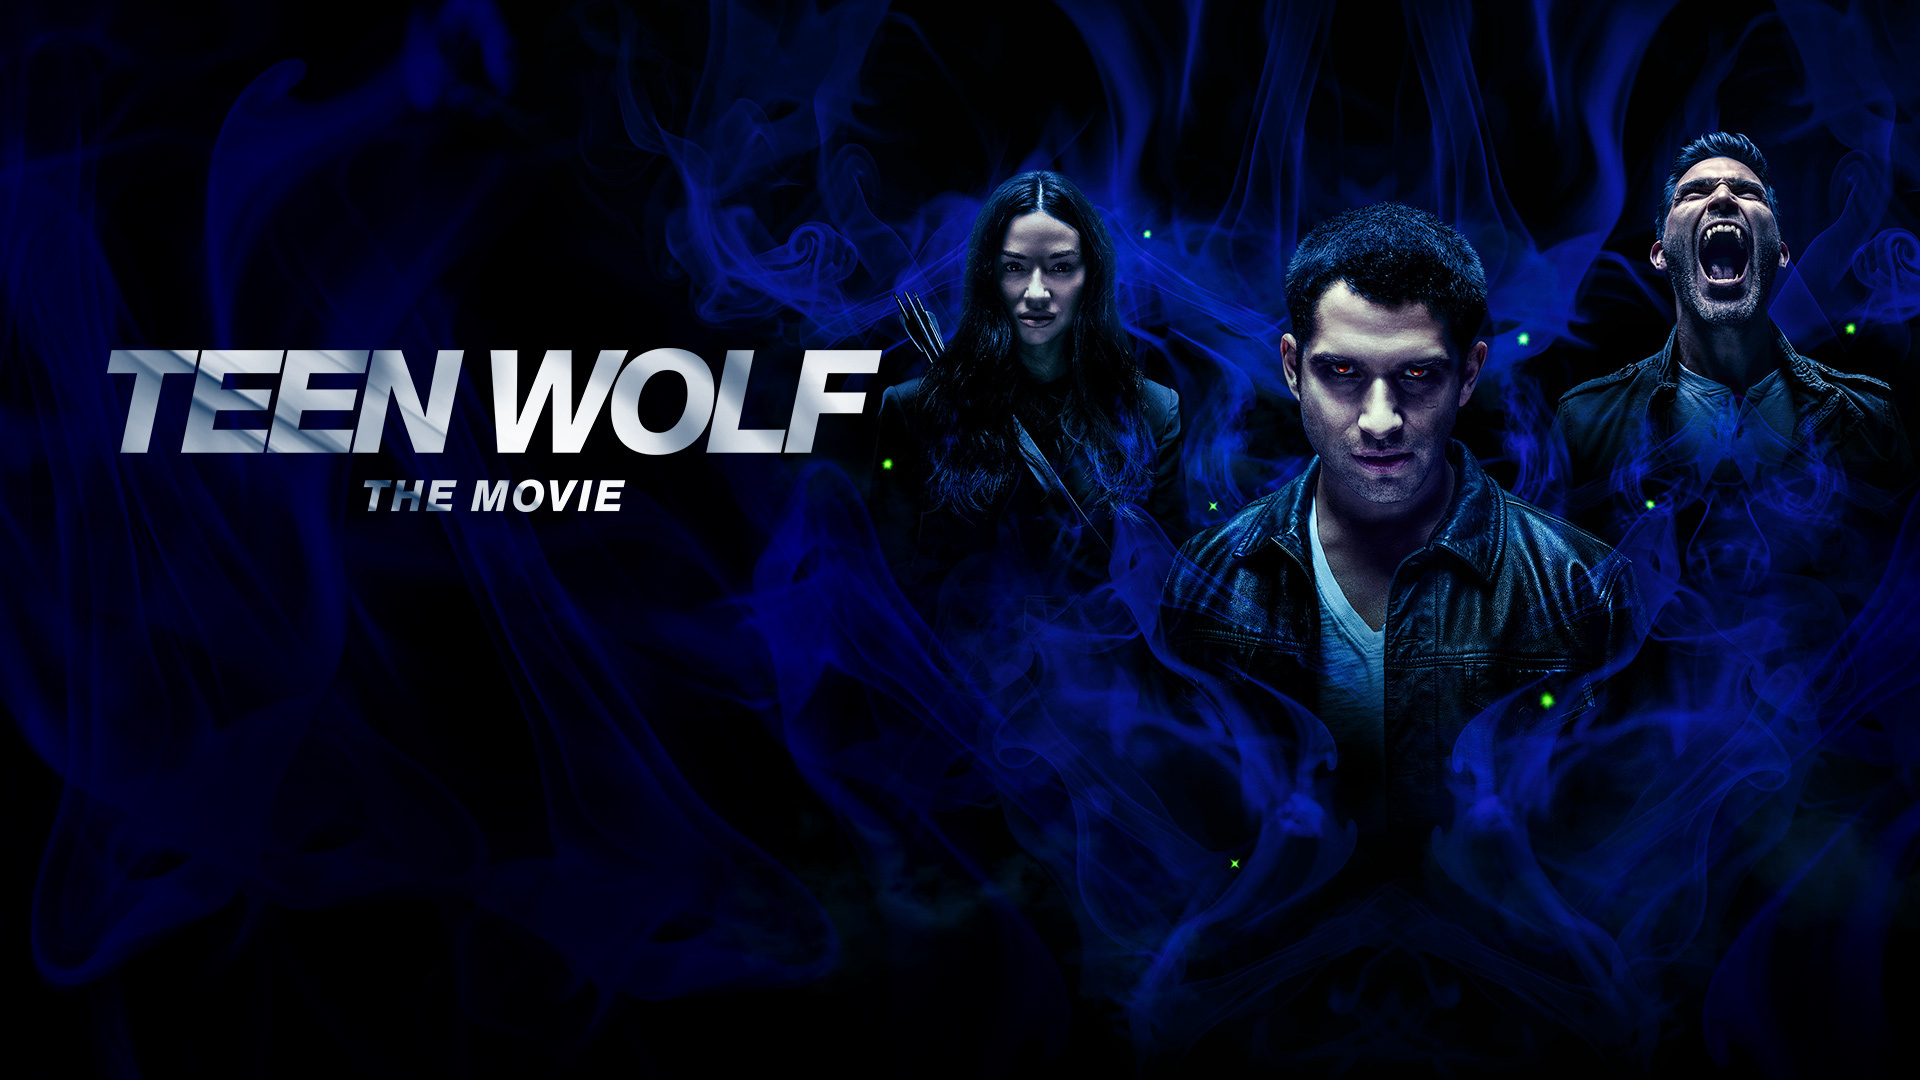 Teen Wolf The Movie Watch Full Movie on Paramount Plus